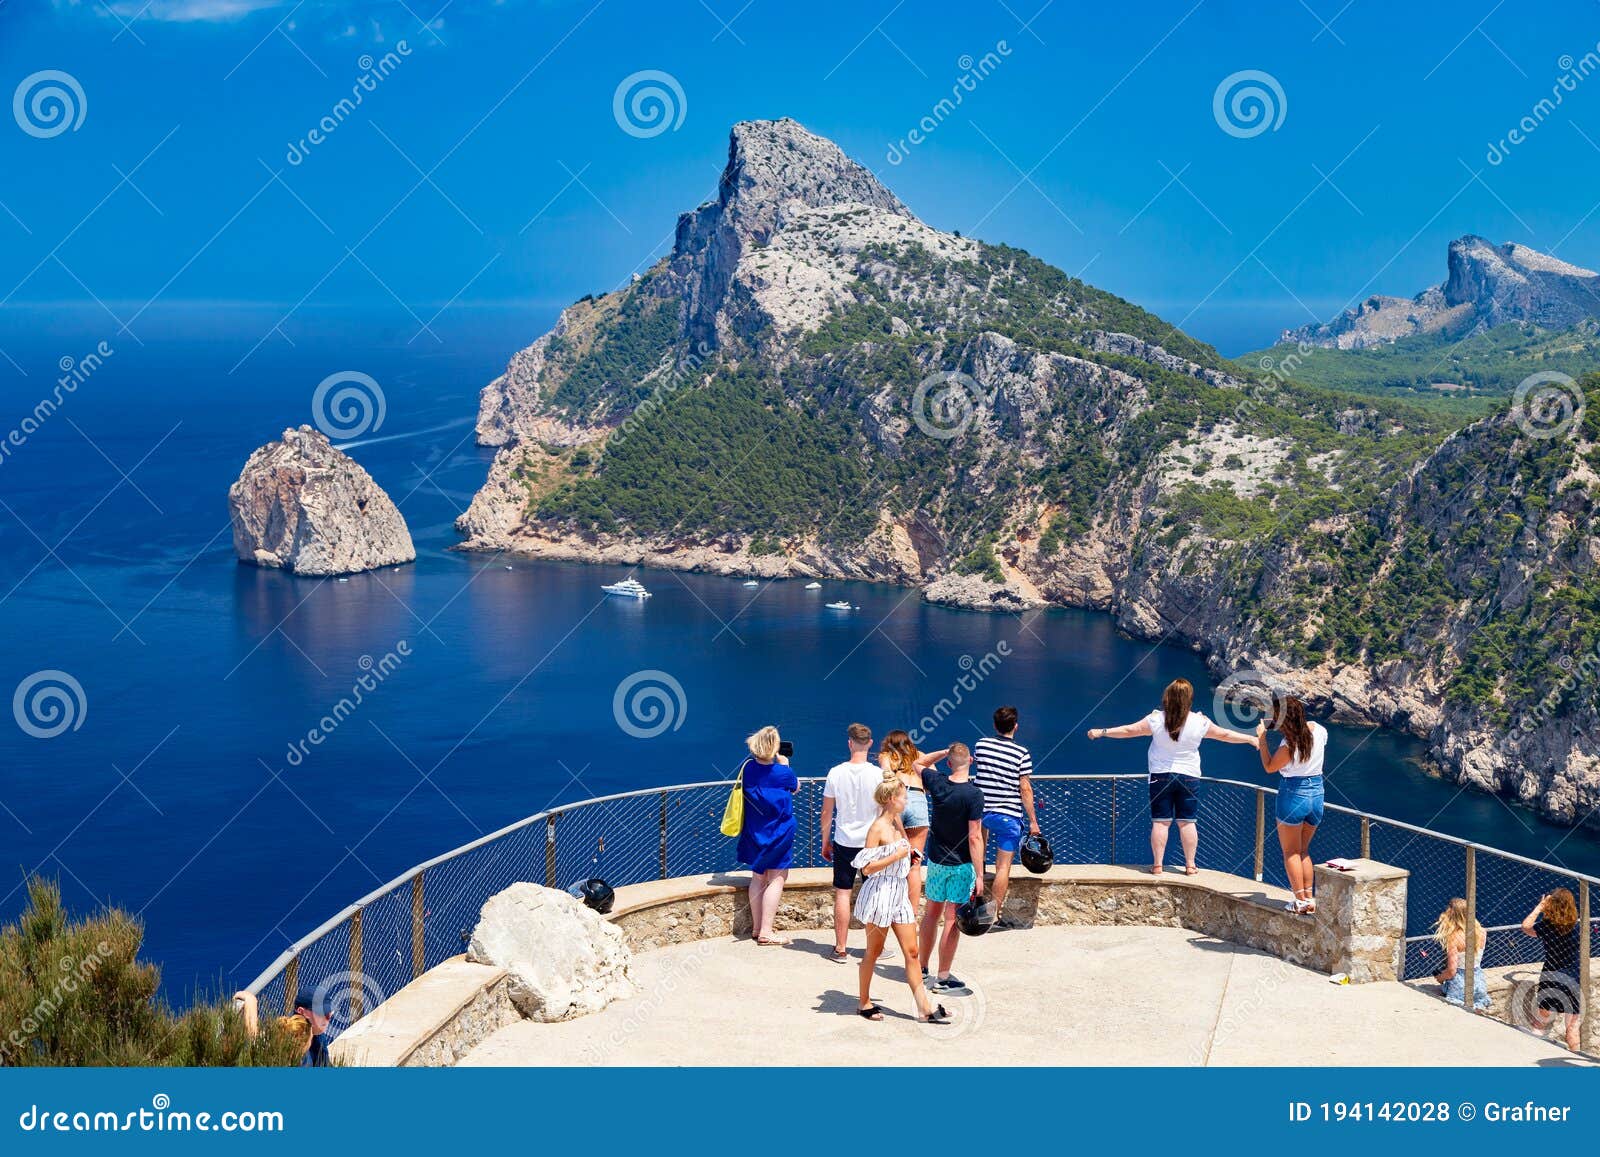 tourists at vantage point with view mirador es colomer on punta nau at cap formentor majorca mallorca. balearic islands country of